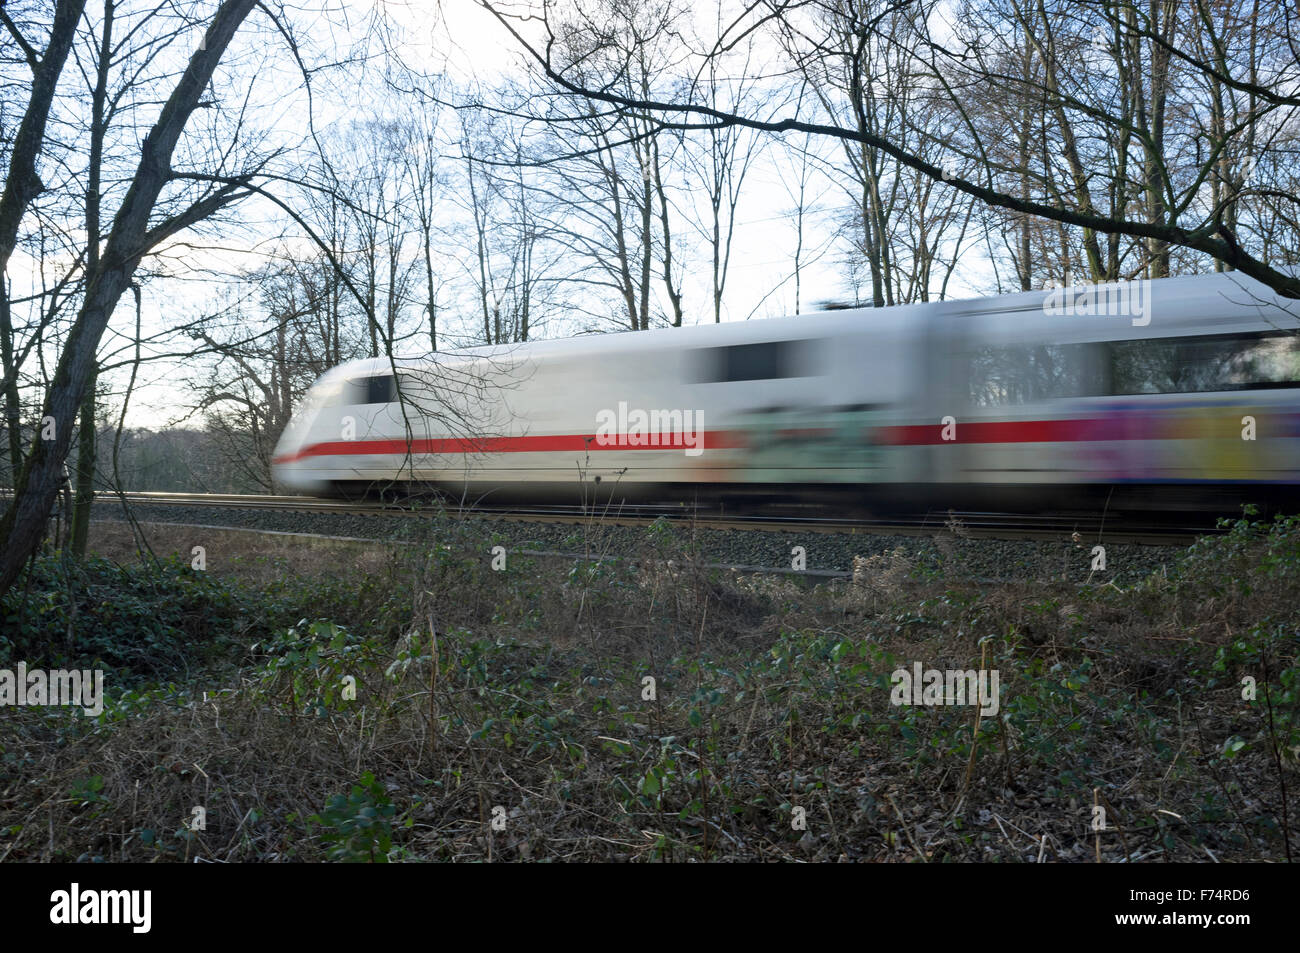 German Railways InterCity high-speed passenger train, Leichlingen, Germany. Stock Photo